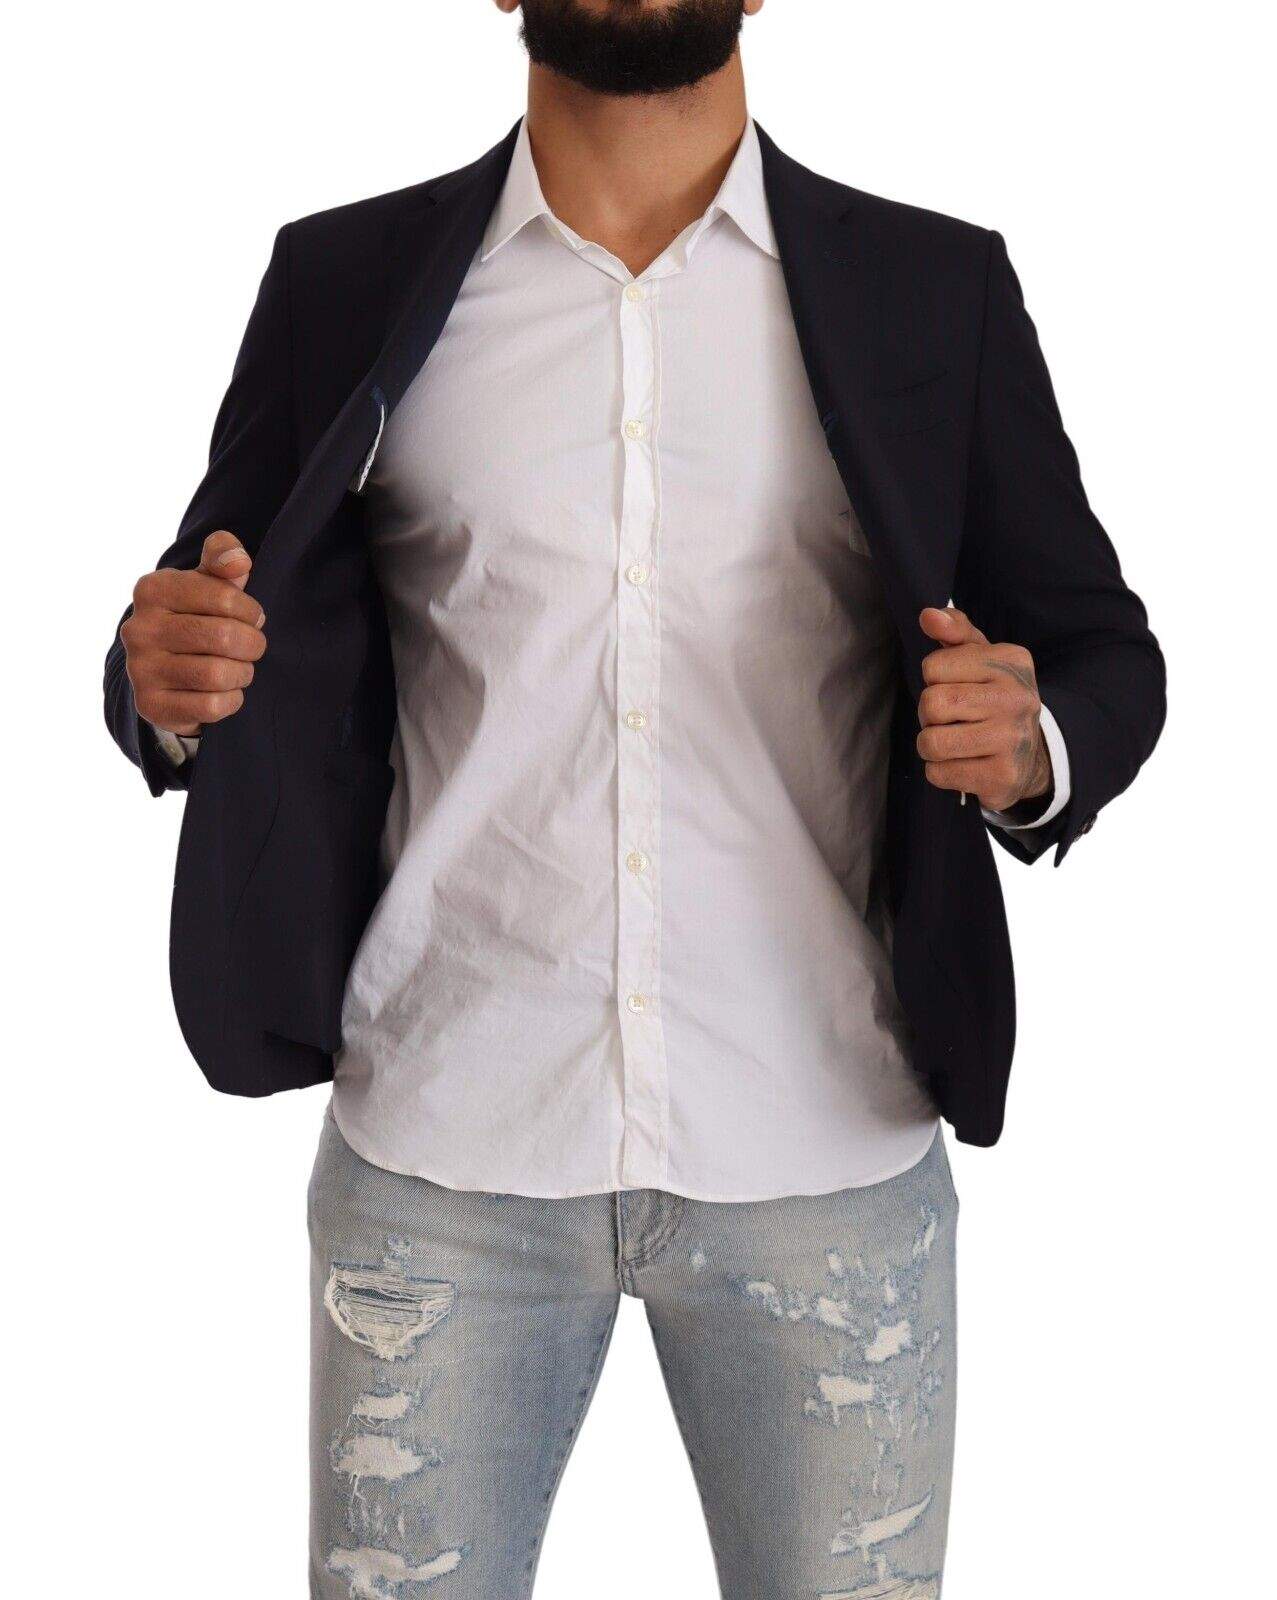 Doico Tagliente Black Single Breasted One Button Suit Jacket #men, Black, Domenico Tagliente, feed-1, IT50 | L, IT52 | XL, Jackets - Men - Clothing at SEYMAYKA